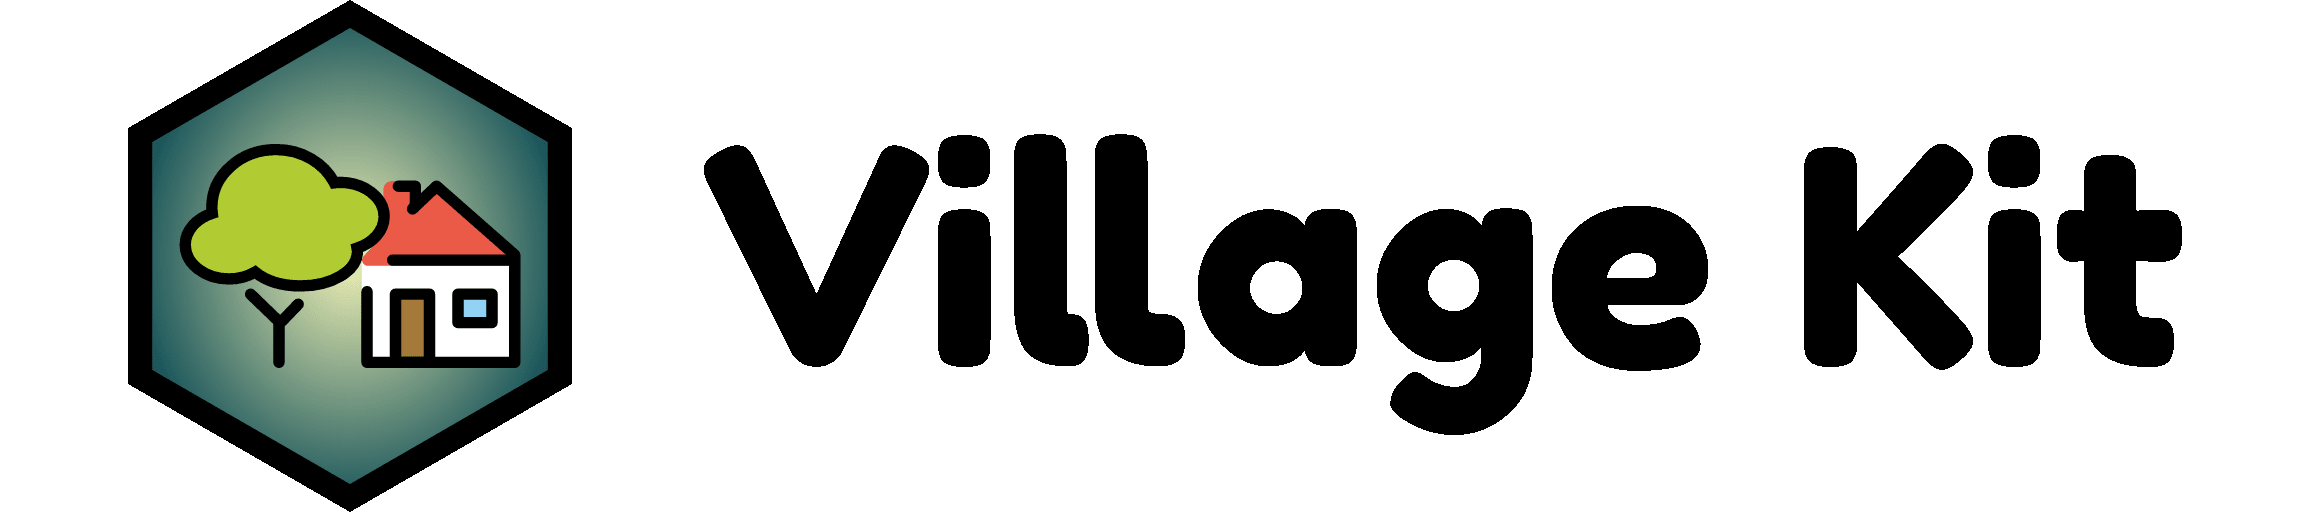 Village Kit Community